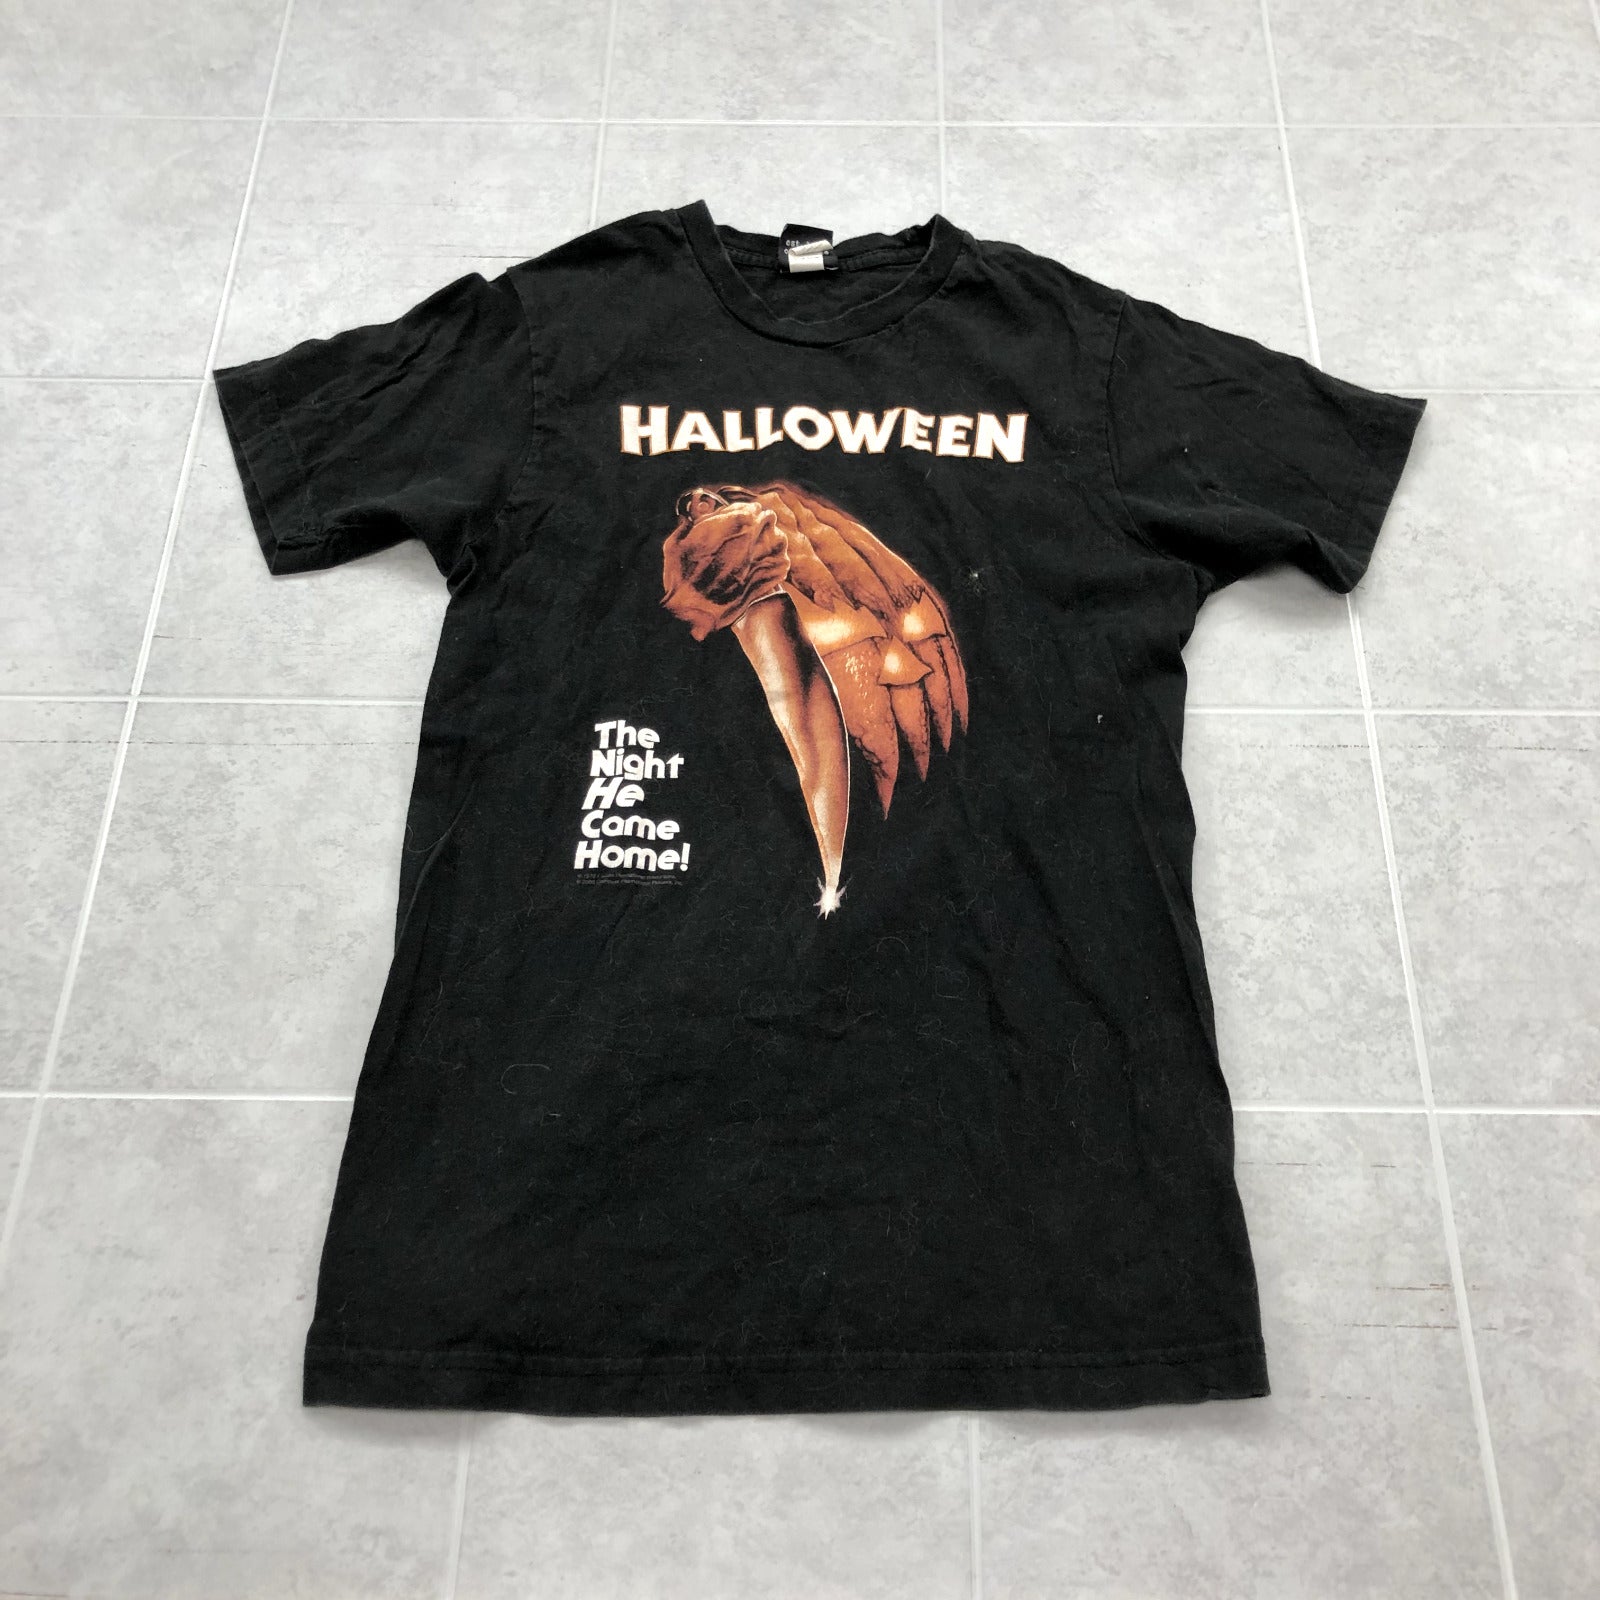 Impact Merchandising Black Short Sleeve Graphic Halloween T-shirt Adult Size S